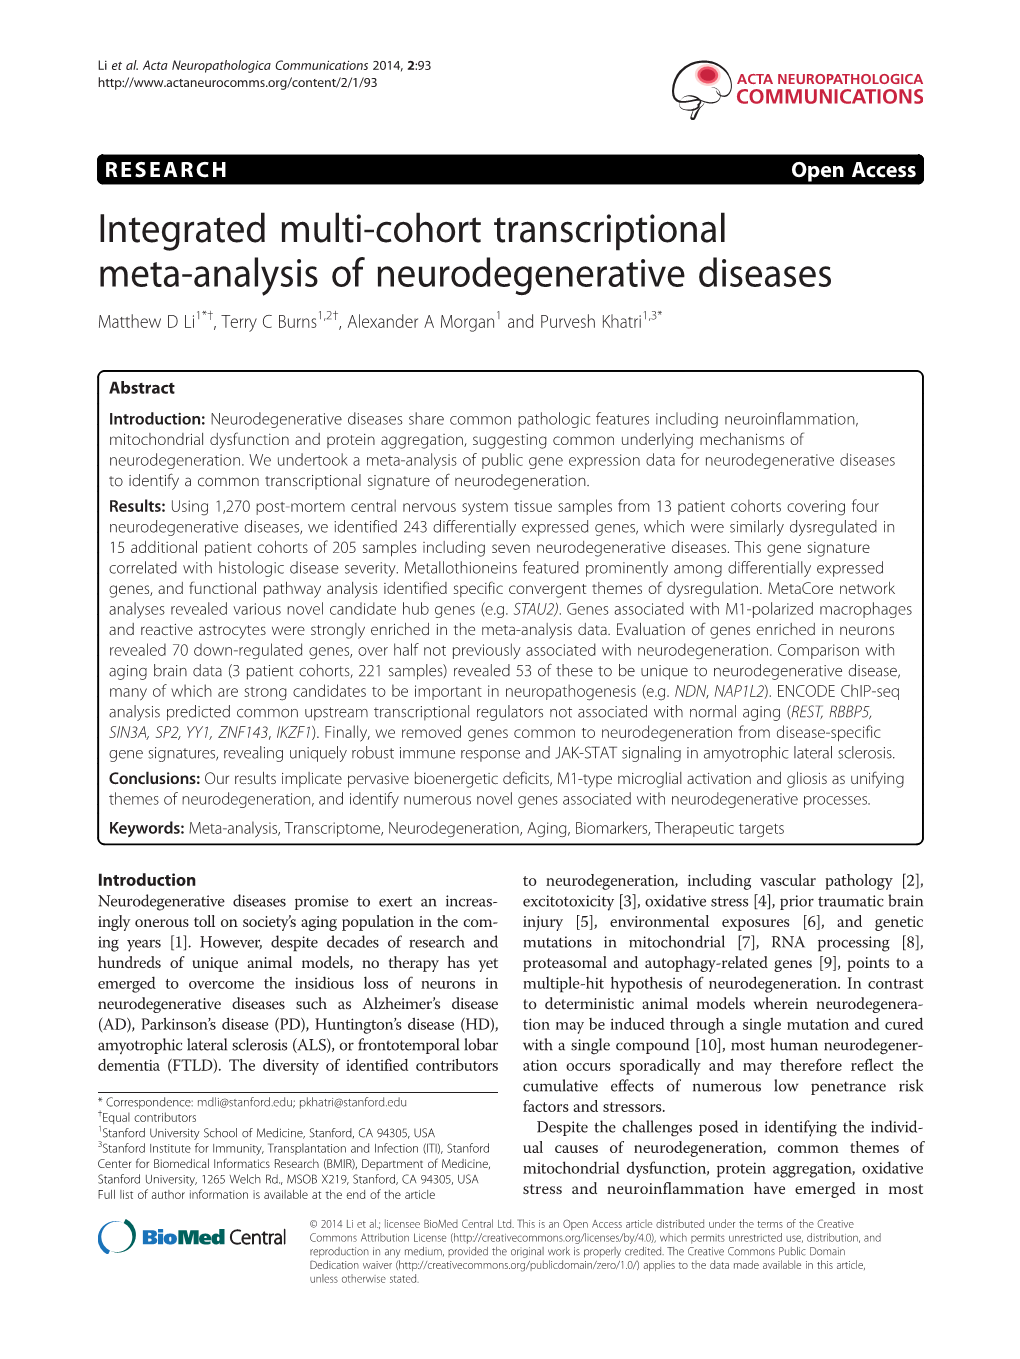 Integrated Multi-Cohort Transcriptional Meta-Analysis of Neurodegenerative Diseases Matthew D Li1*†, Terry C Burns1,2†, Alexander a Morgan1 and Purvesh Khatri1,3*